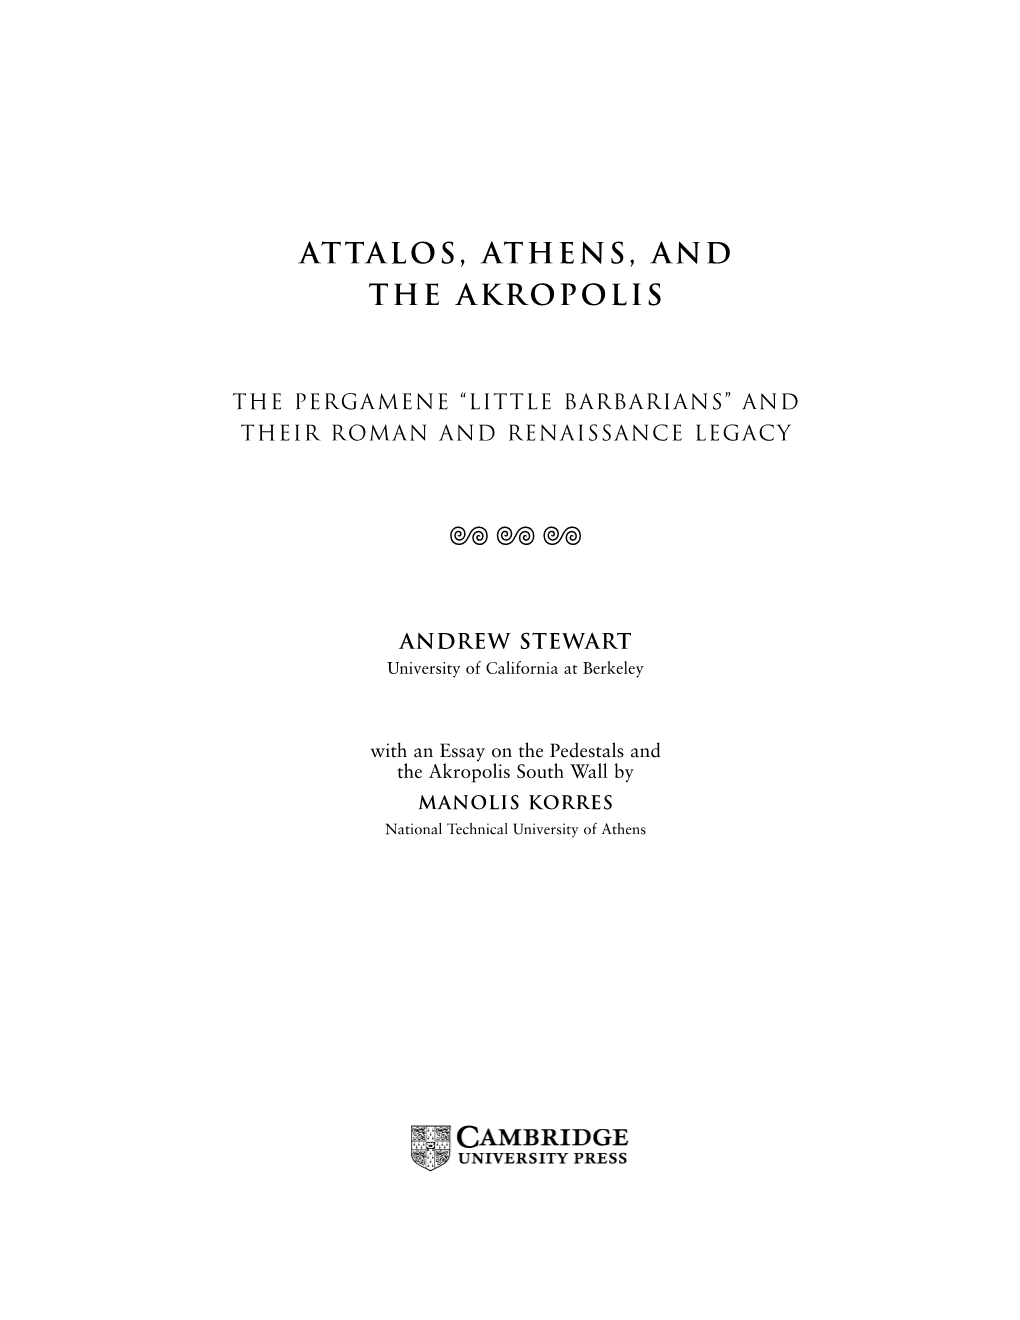 Attalos, Athens, and the Akropolis